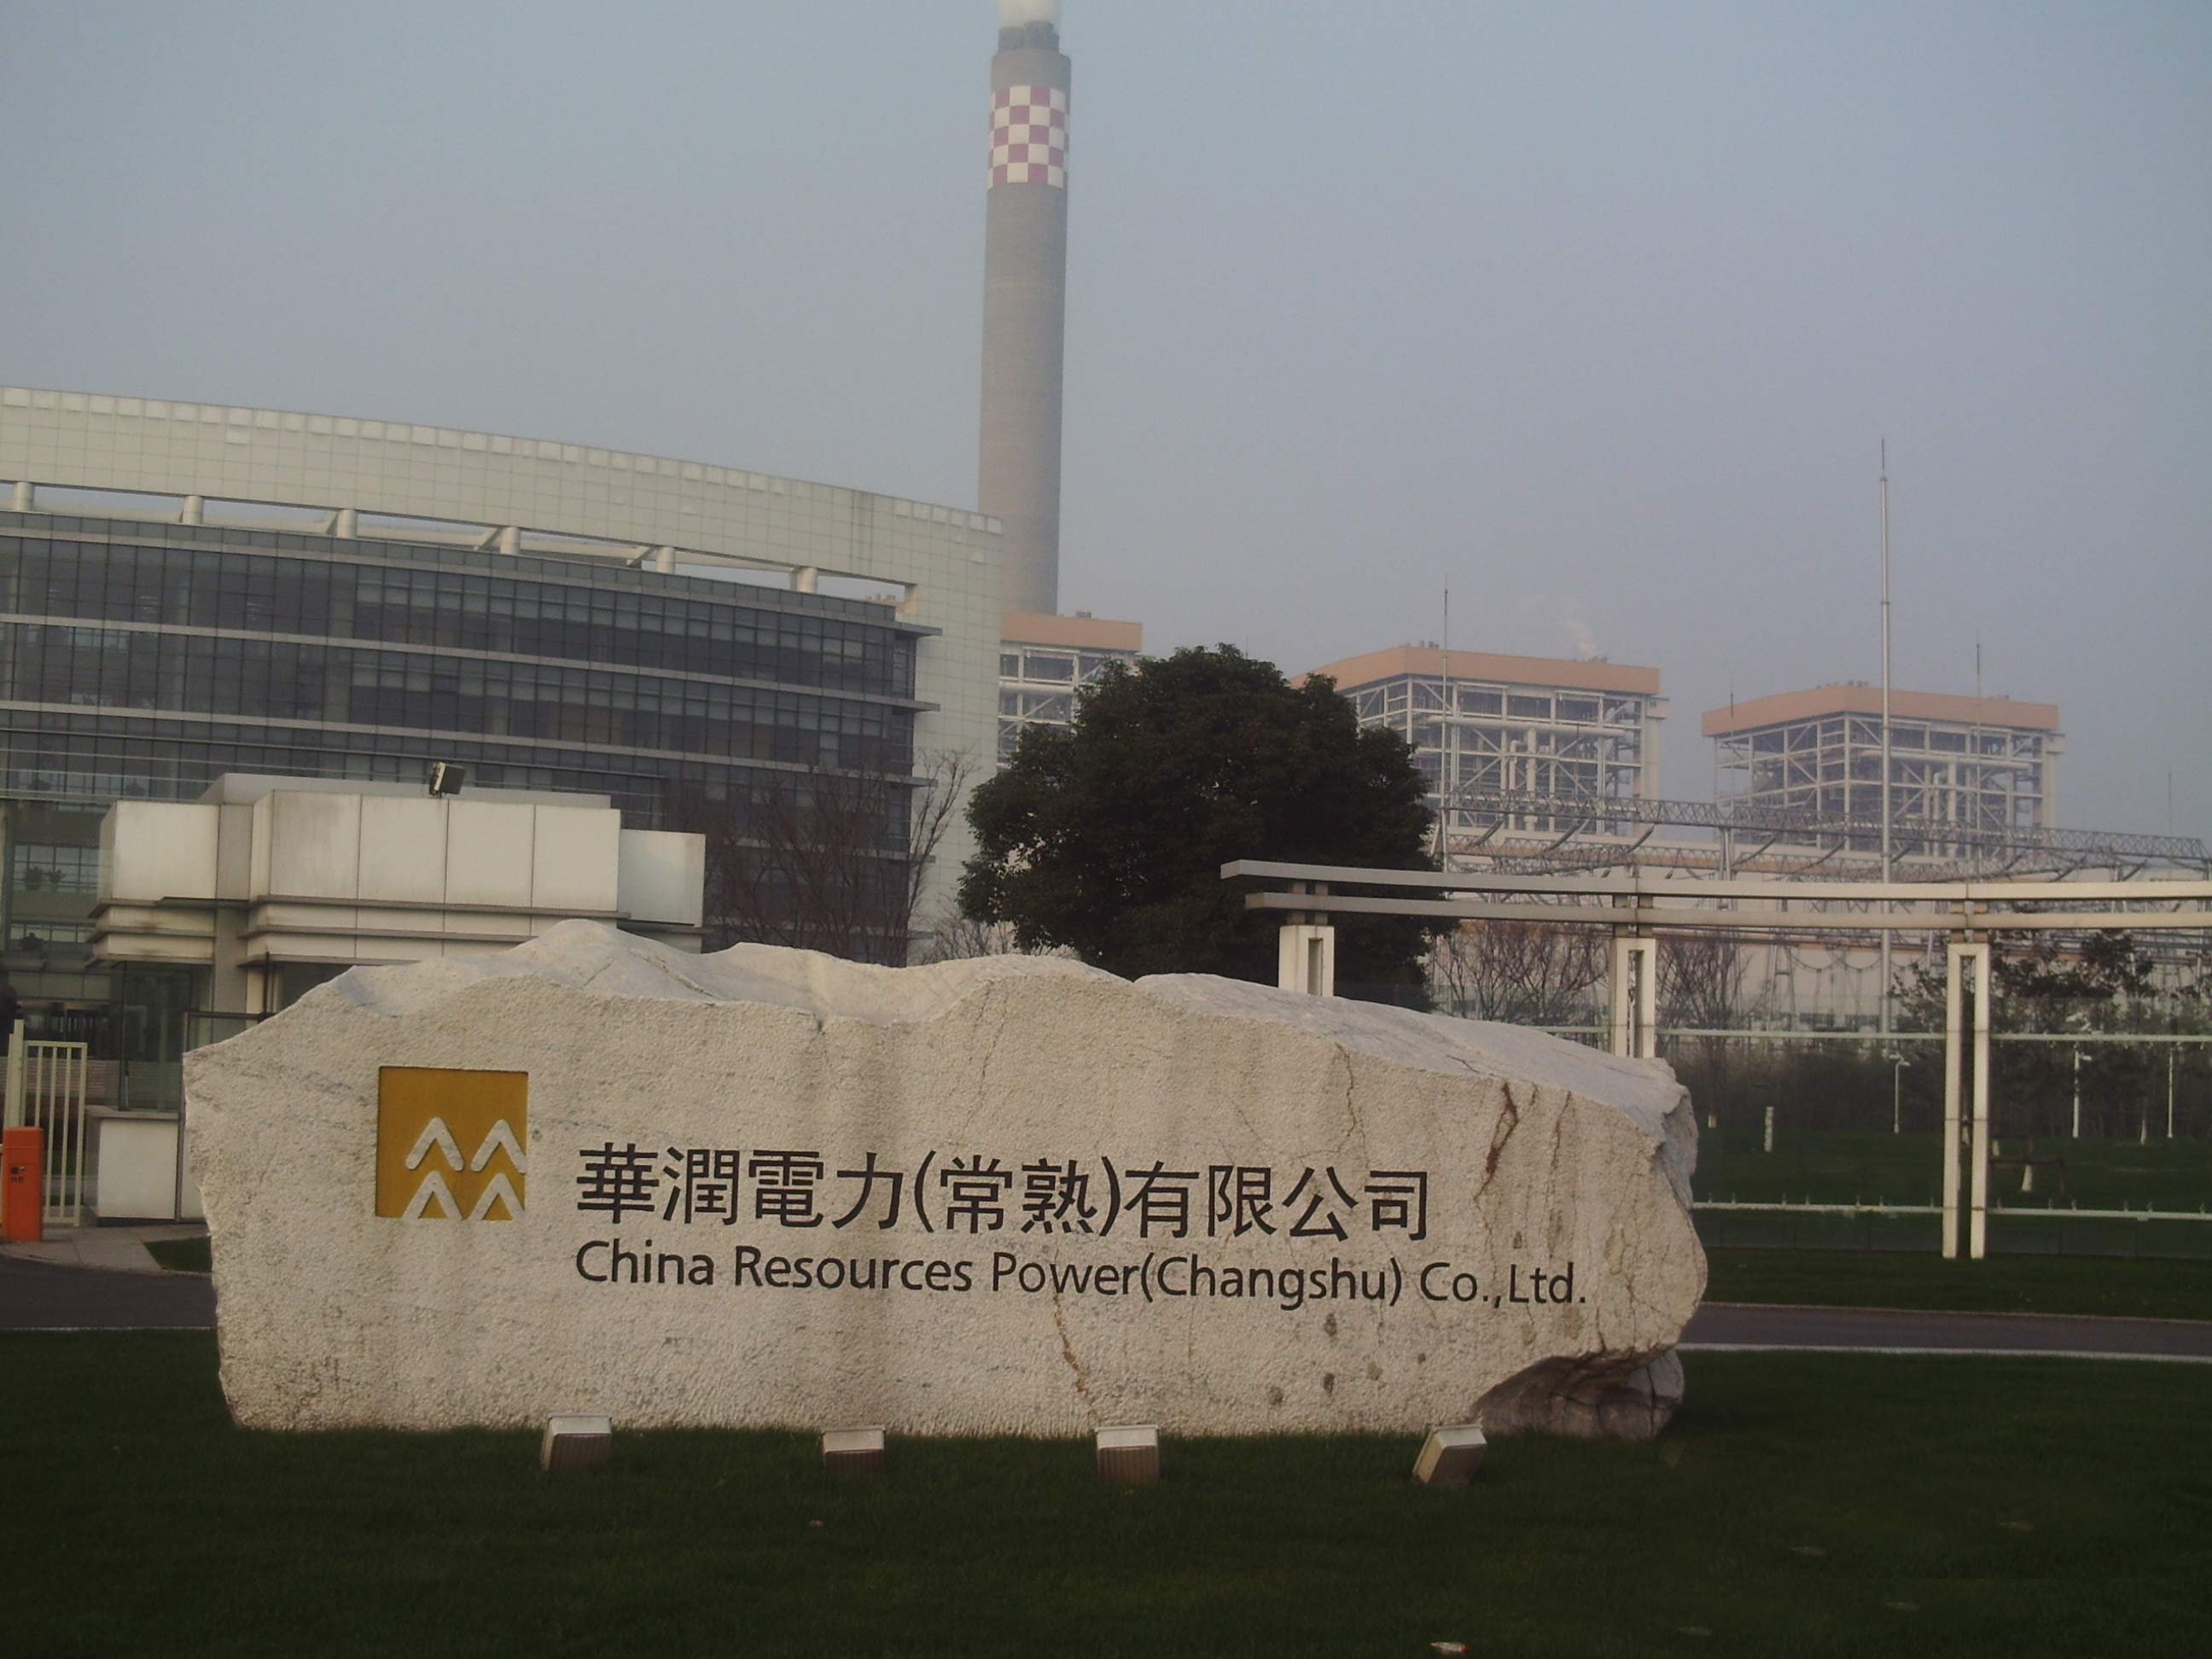 China Resources Power (Shangshu) Co., Ltd Project, China